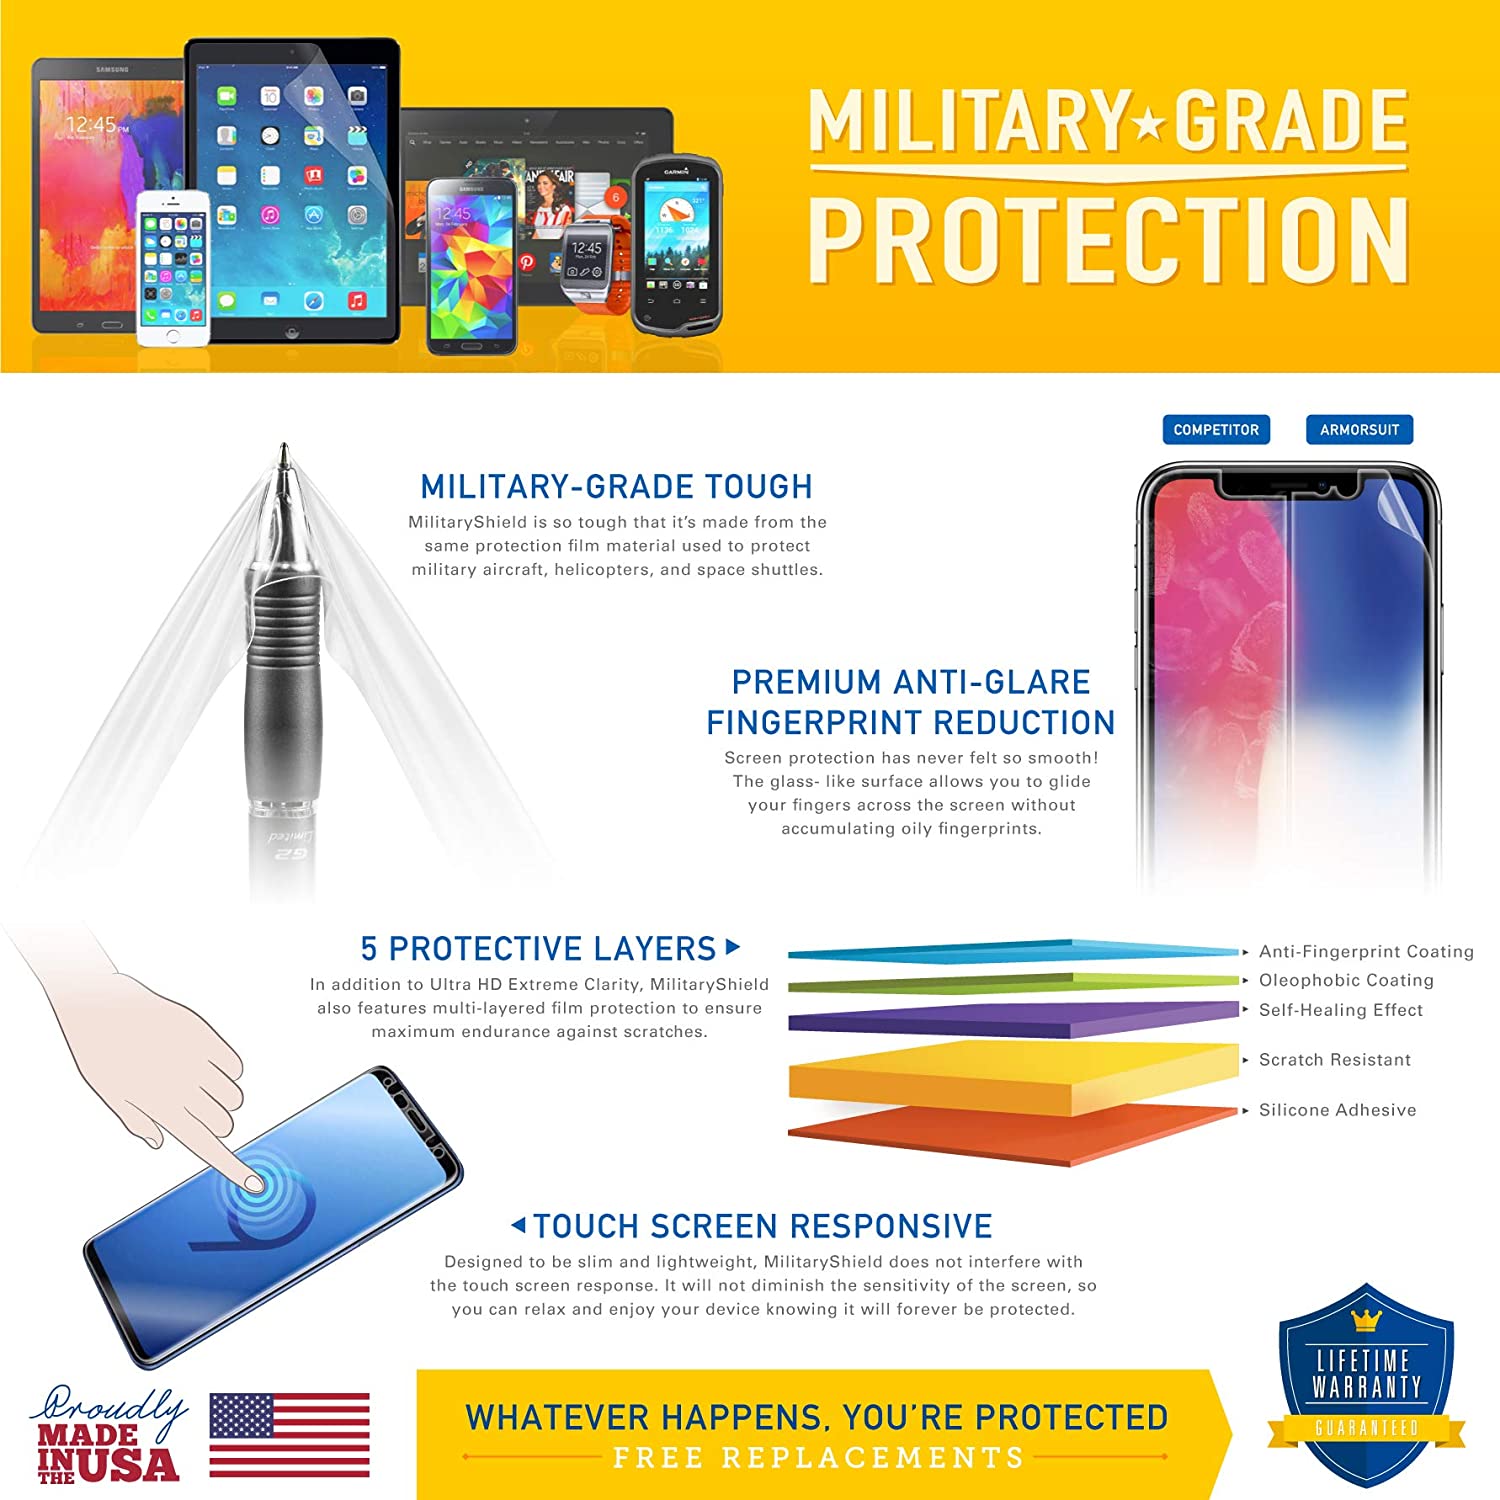 [2-Pack] Samsung Galaxy Amp Prime / Galaxy J3 (2016) Screen Protector